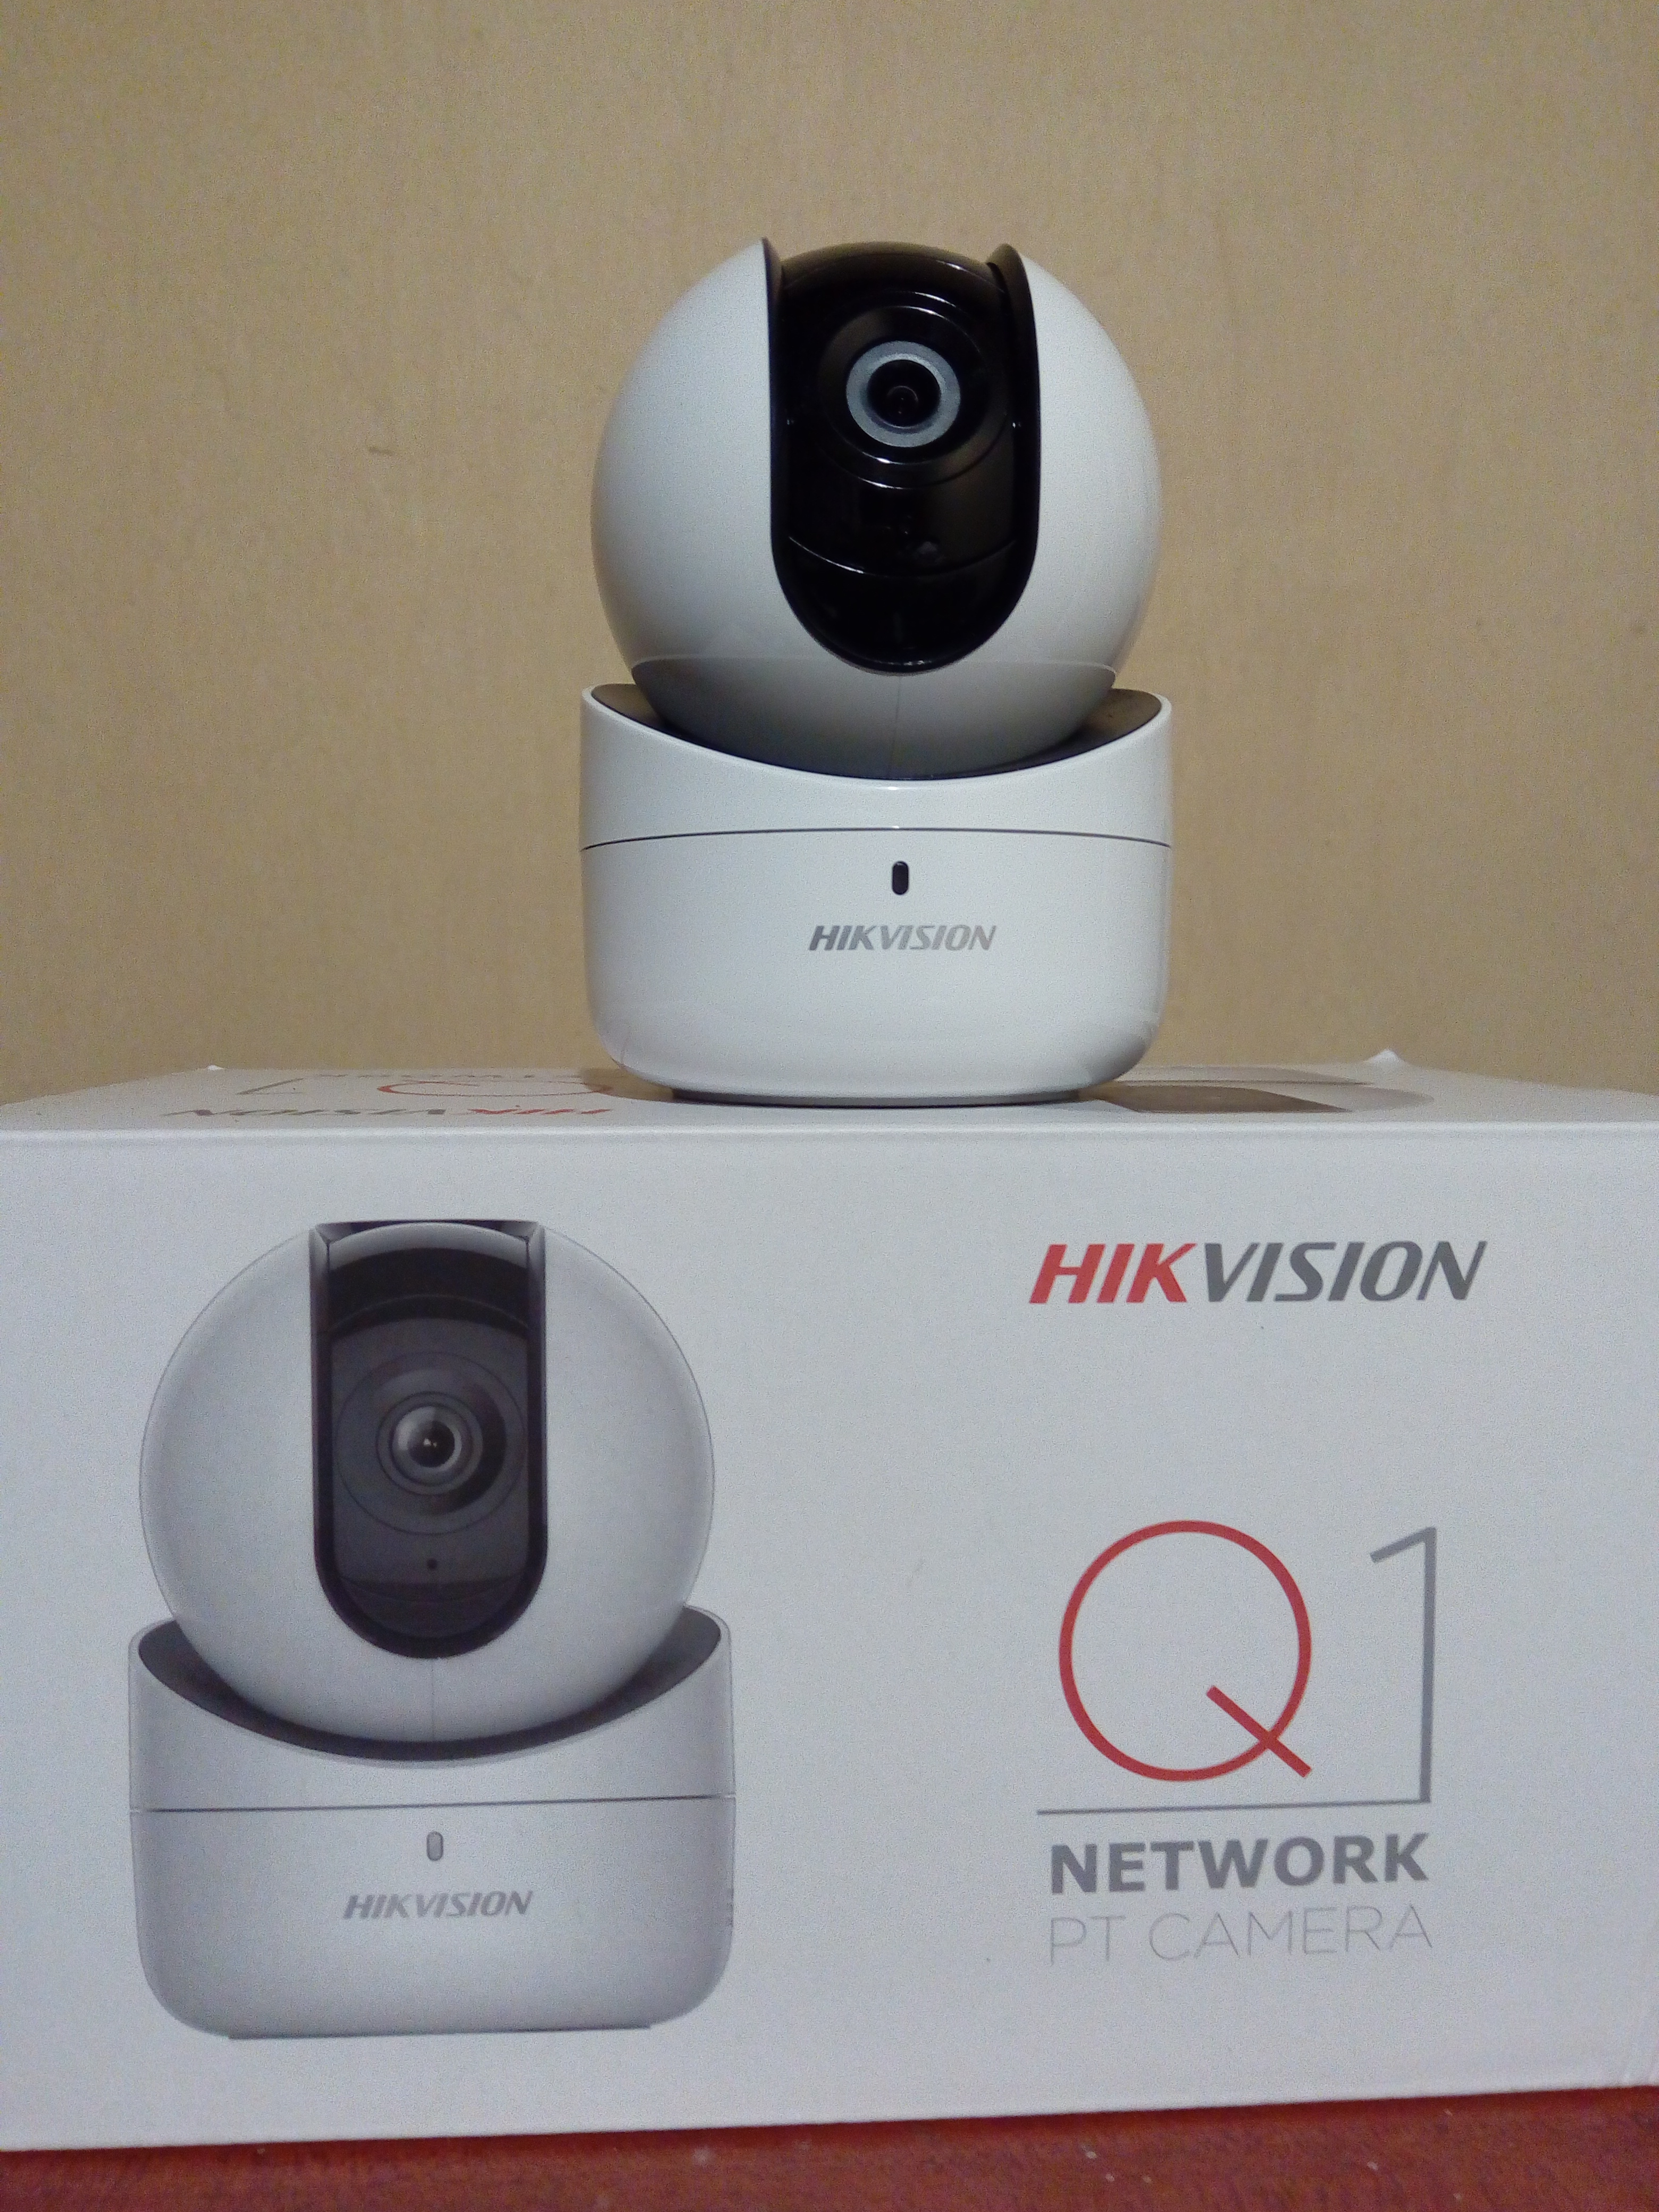 hikvision ip camera password reset tool